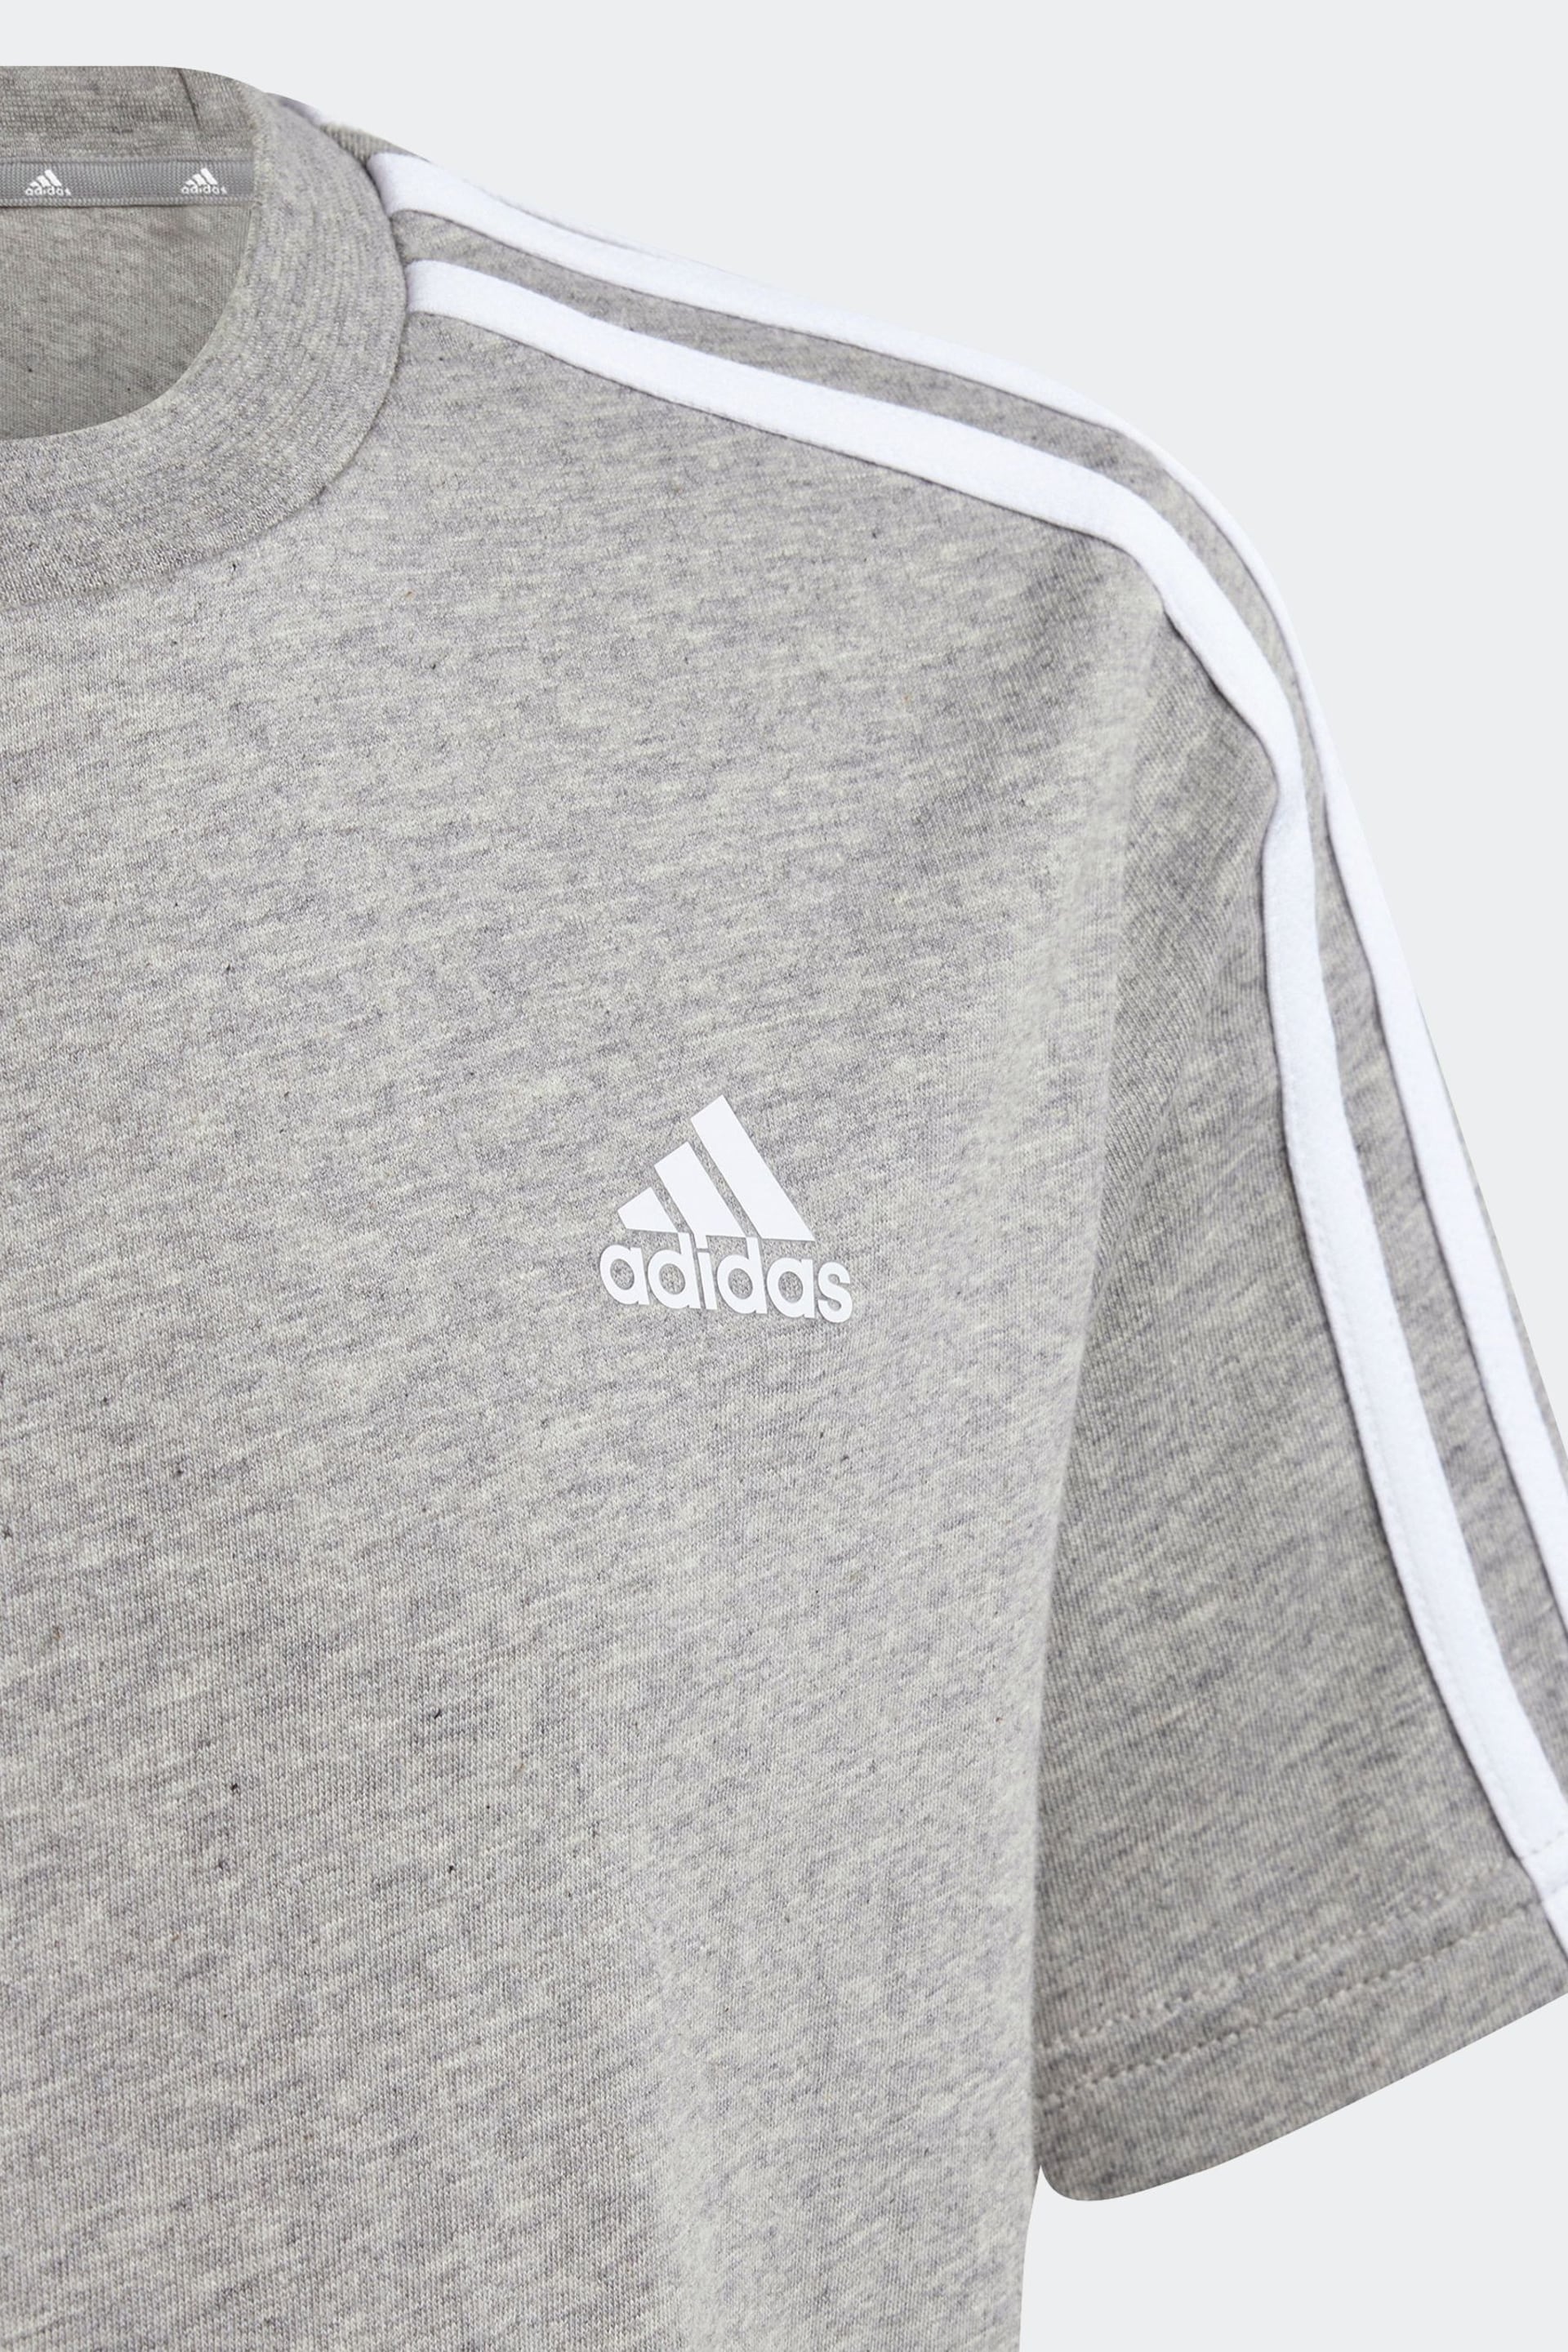 adidas Grey Essentials 3-Stripes Cotton T-Shirt - Image 3 of 5